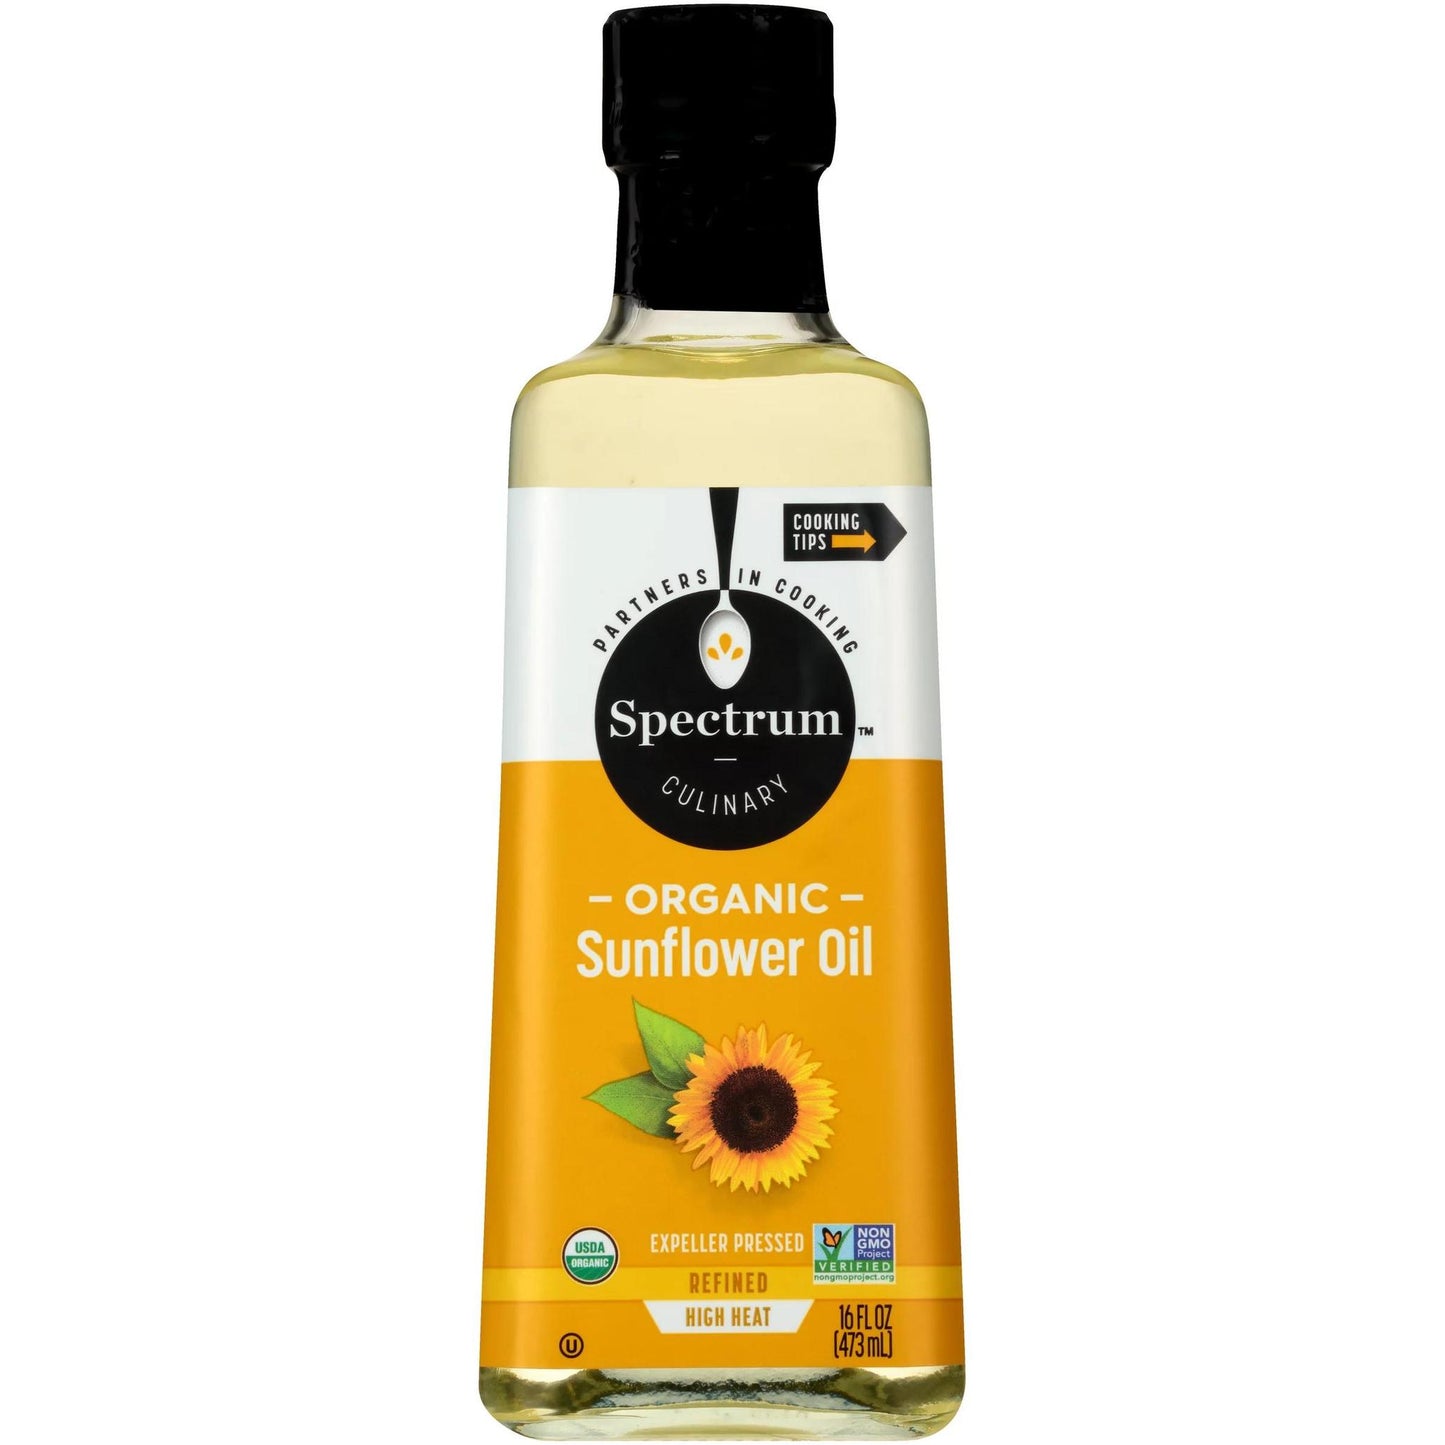 Spectrum Sunflower Oil